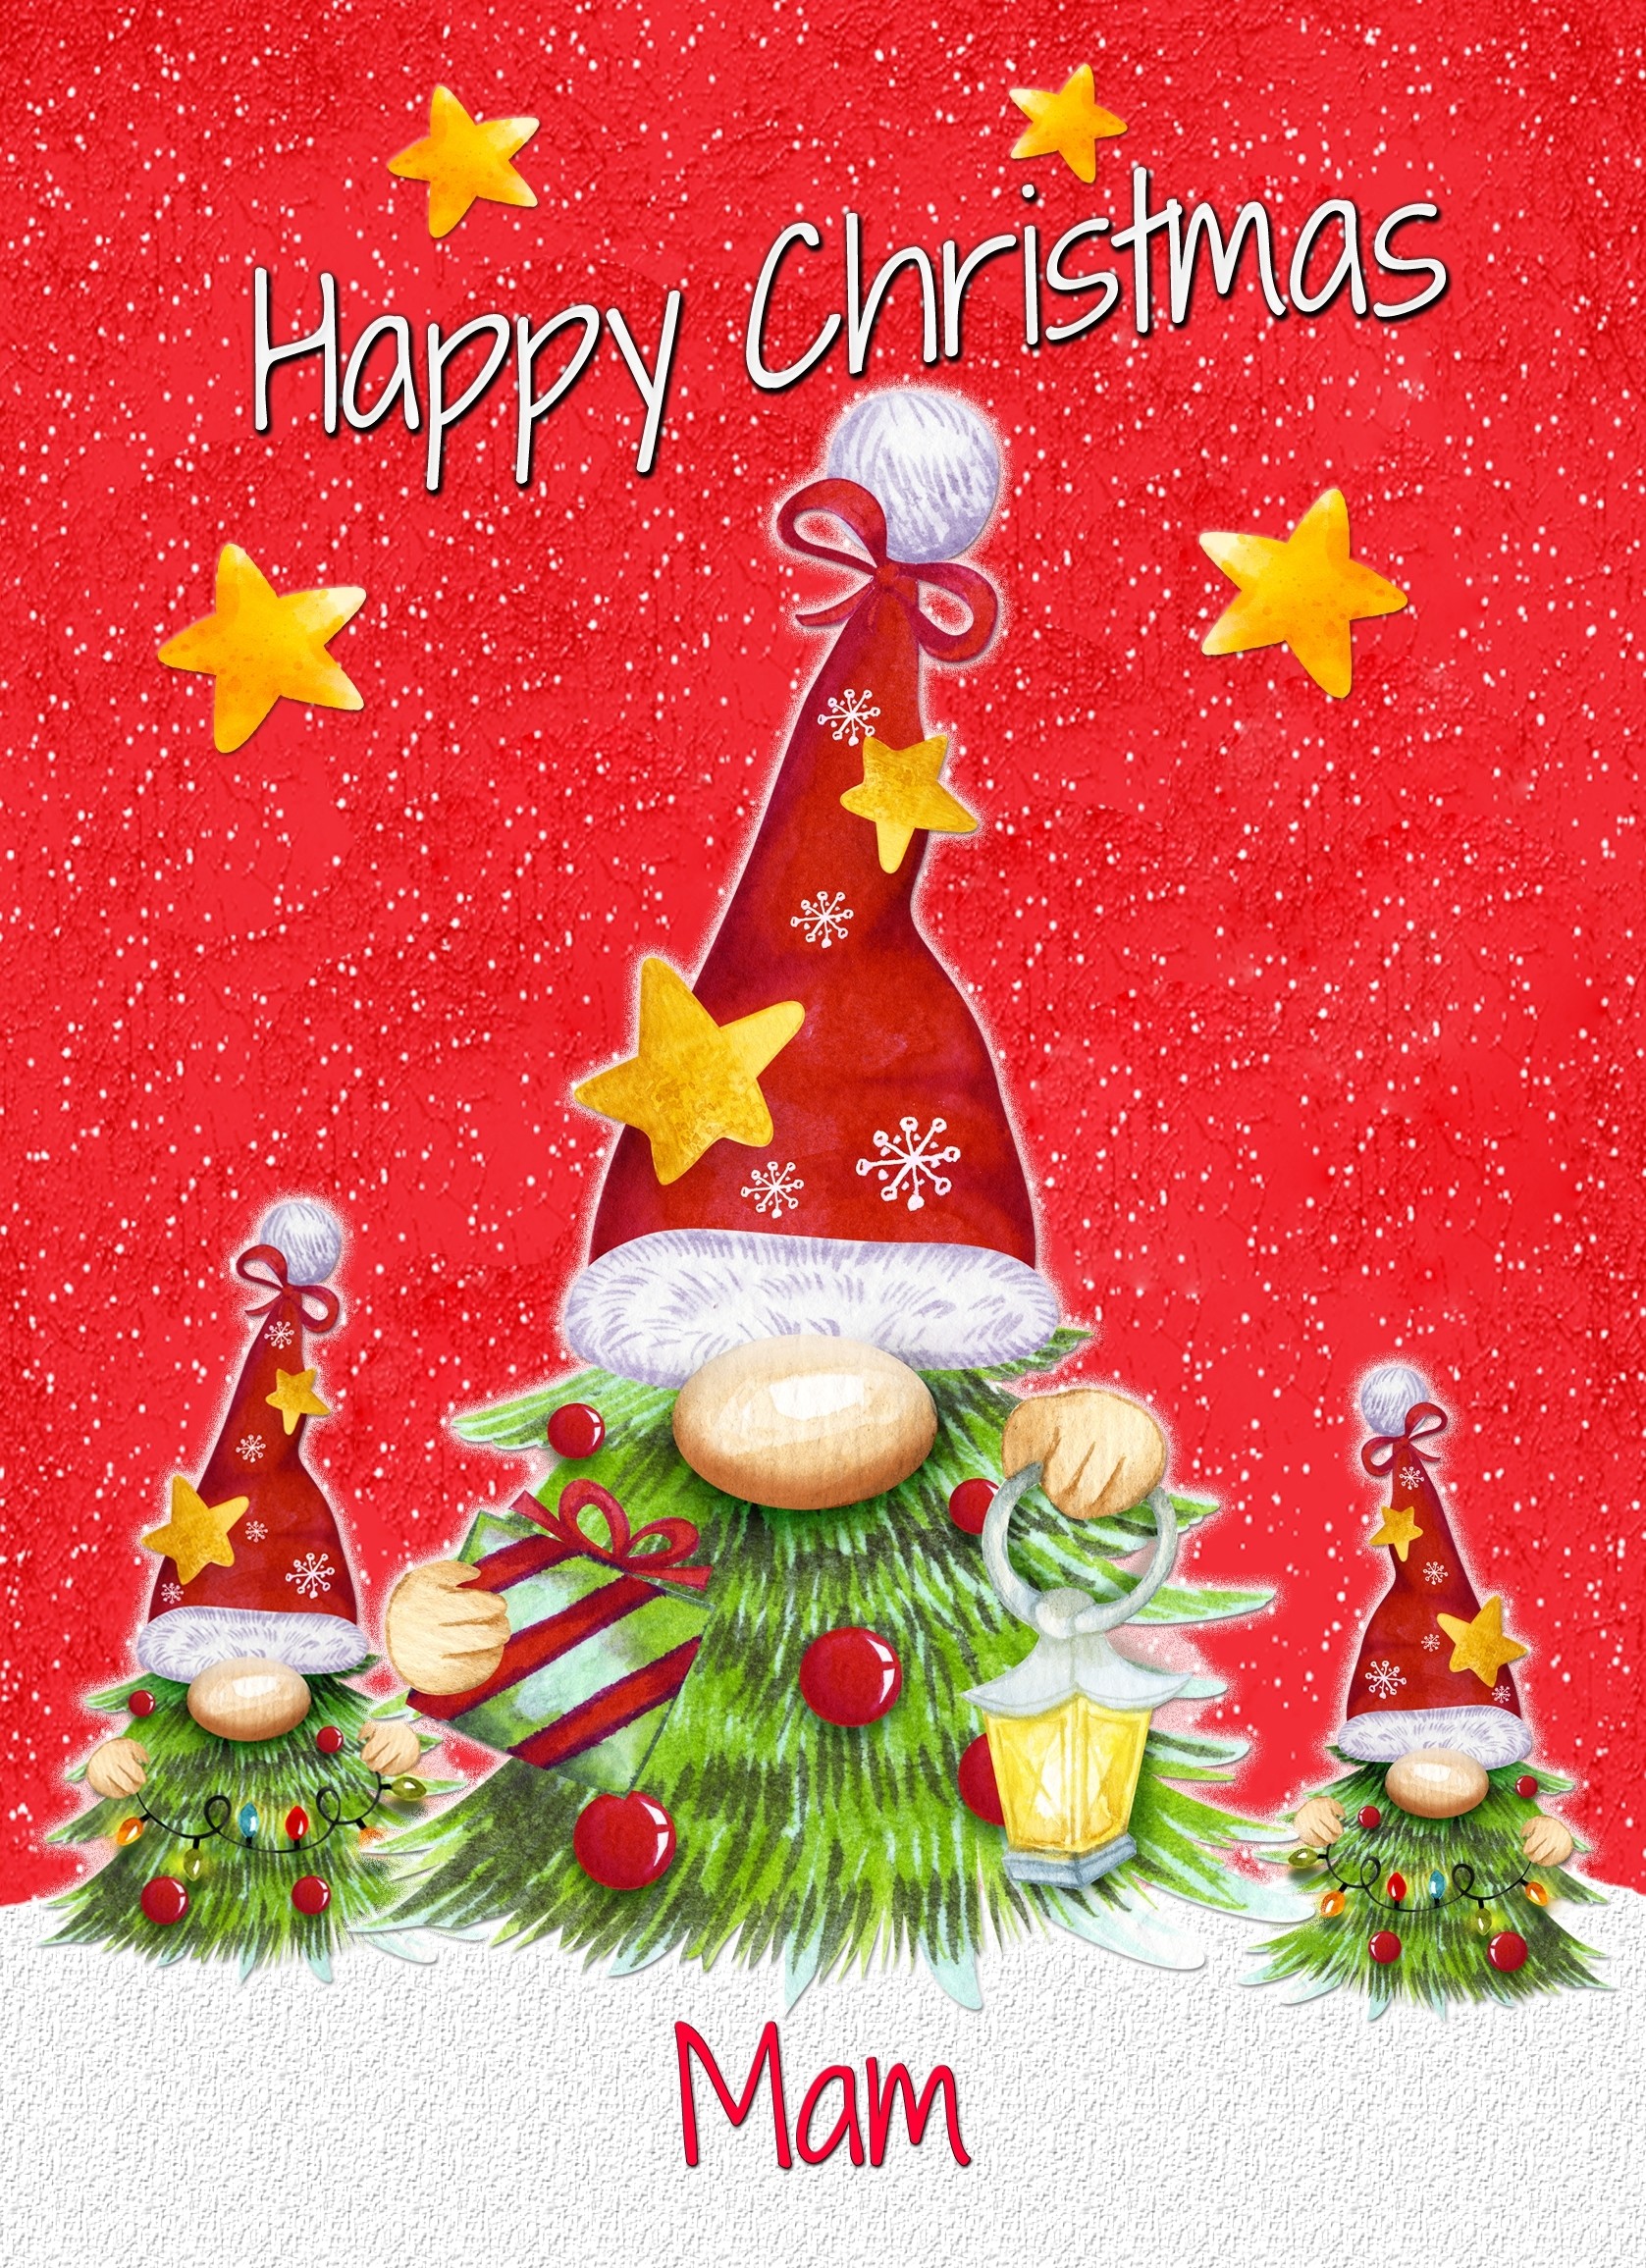 Christmas Card For Mam (Gnome, Red)